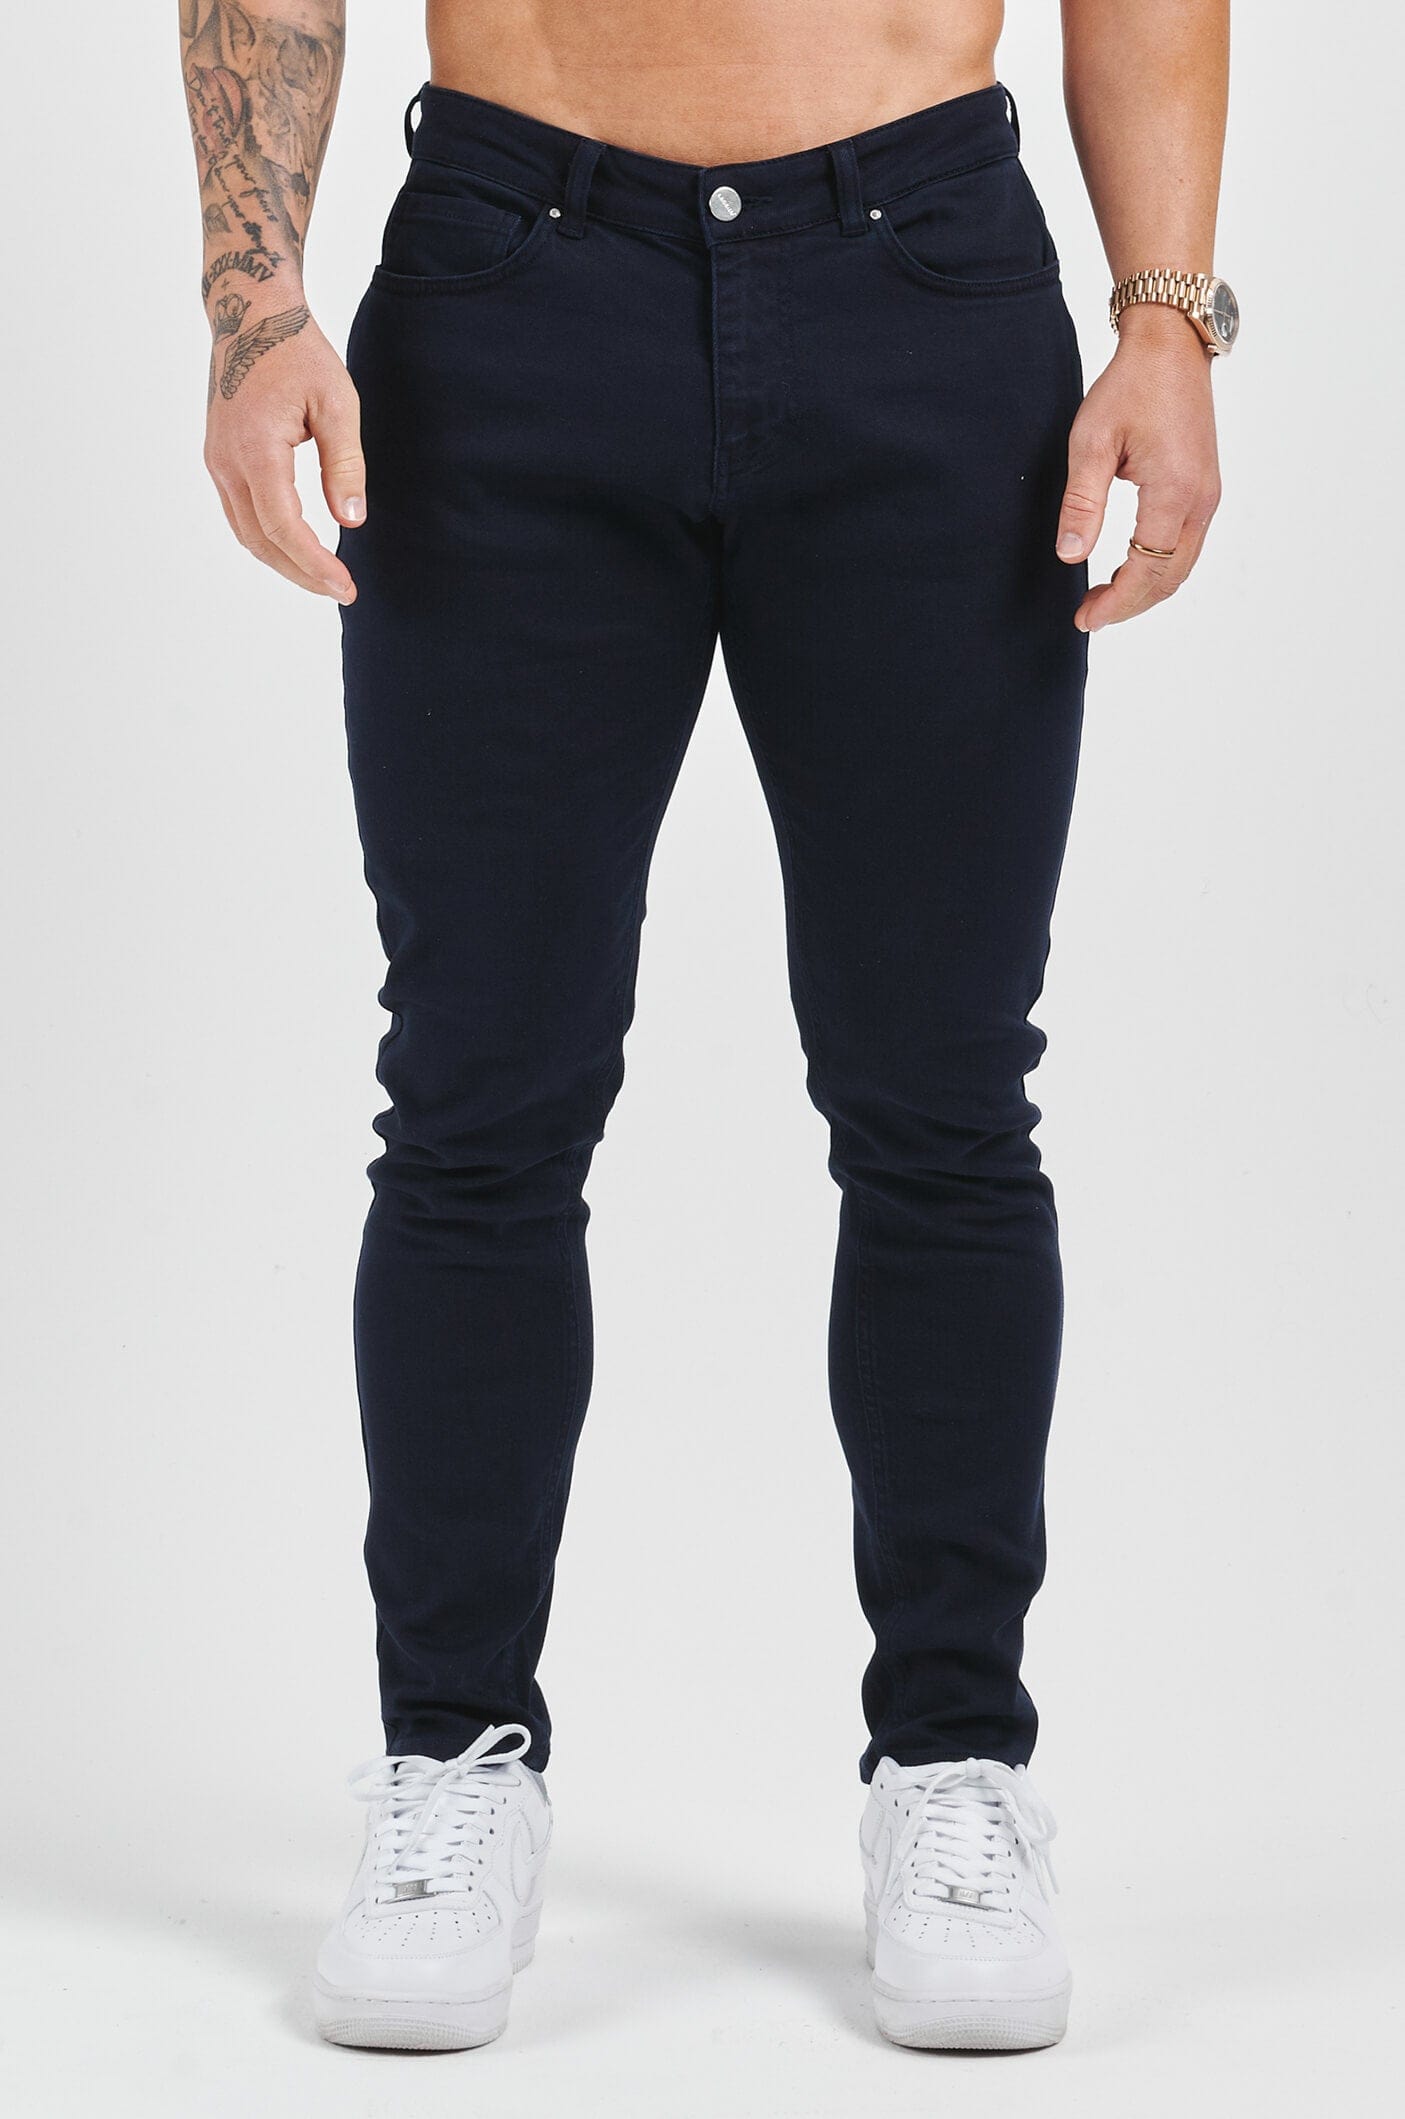 Legend London Jeans - slim 2.0 SLIM FIT JEANS 2.0 - NAVY